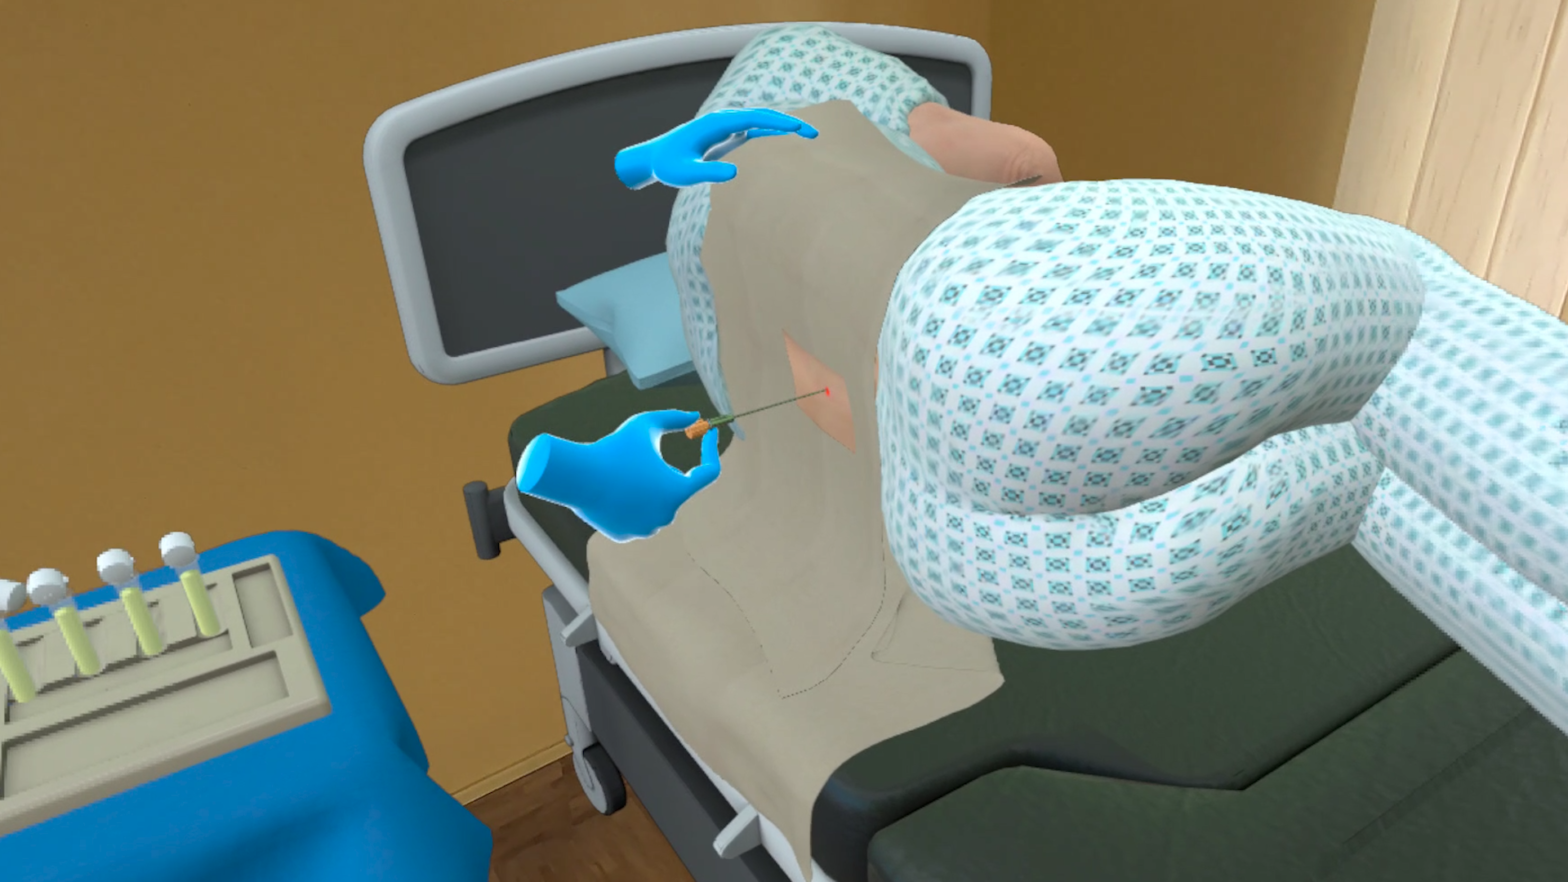 VR training nursing skills